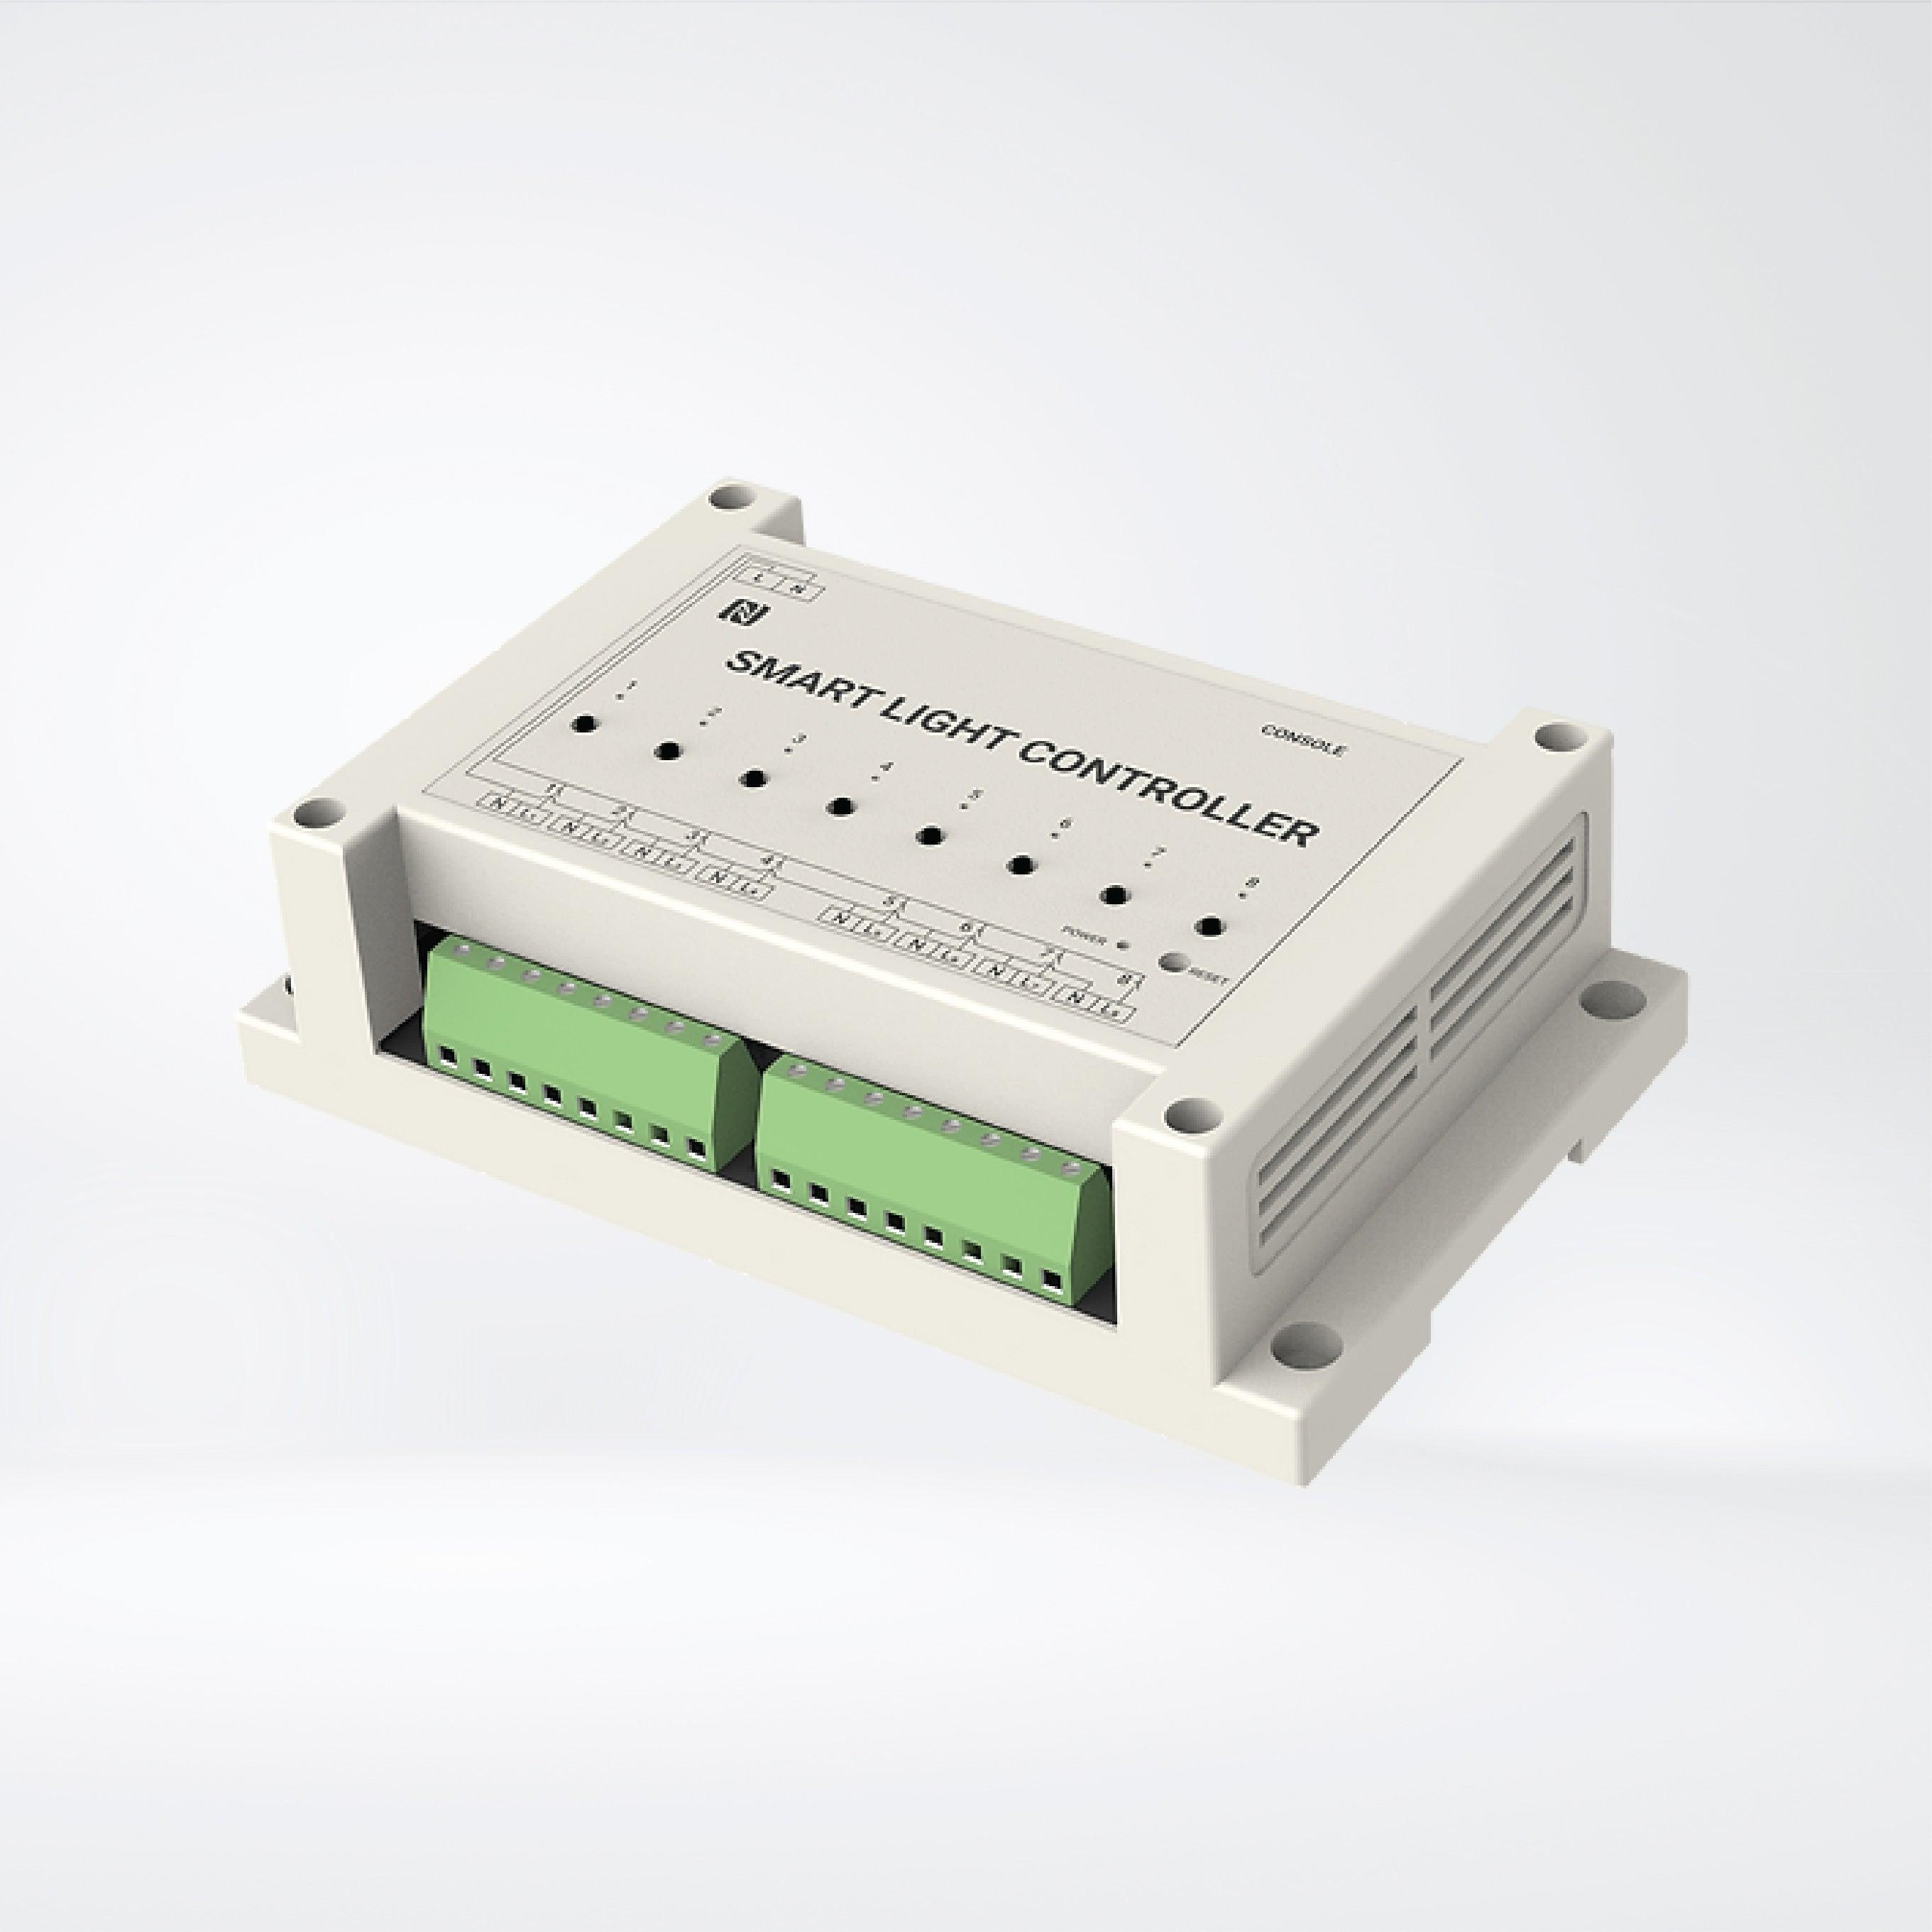 WS558-915M-LN Smart Light Controller - Riverplus